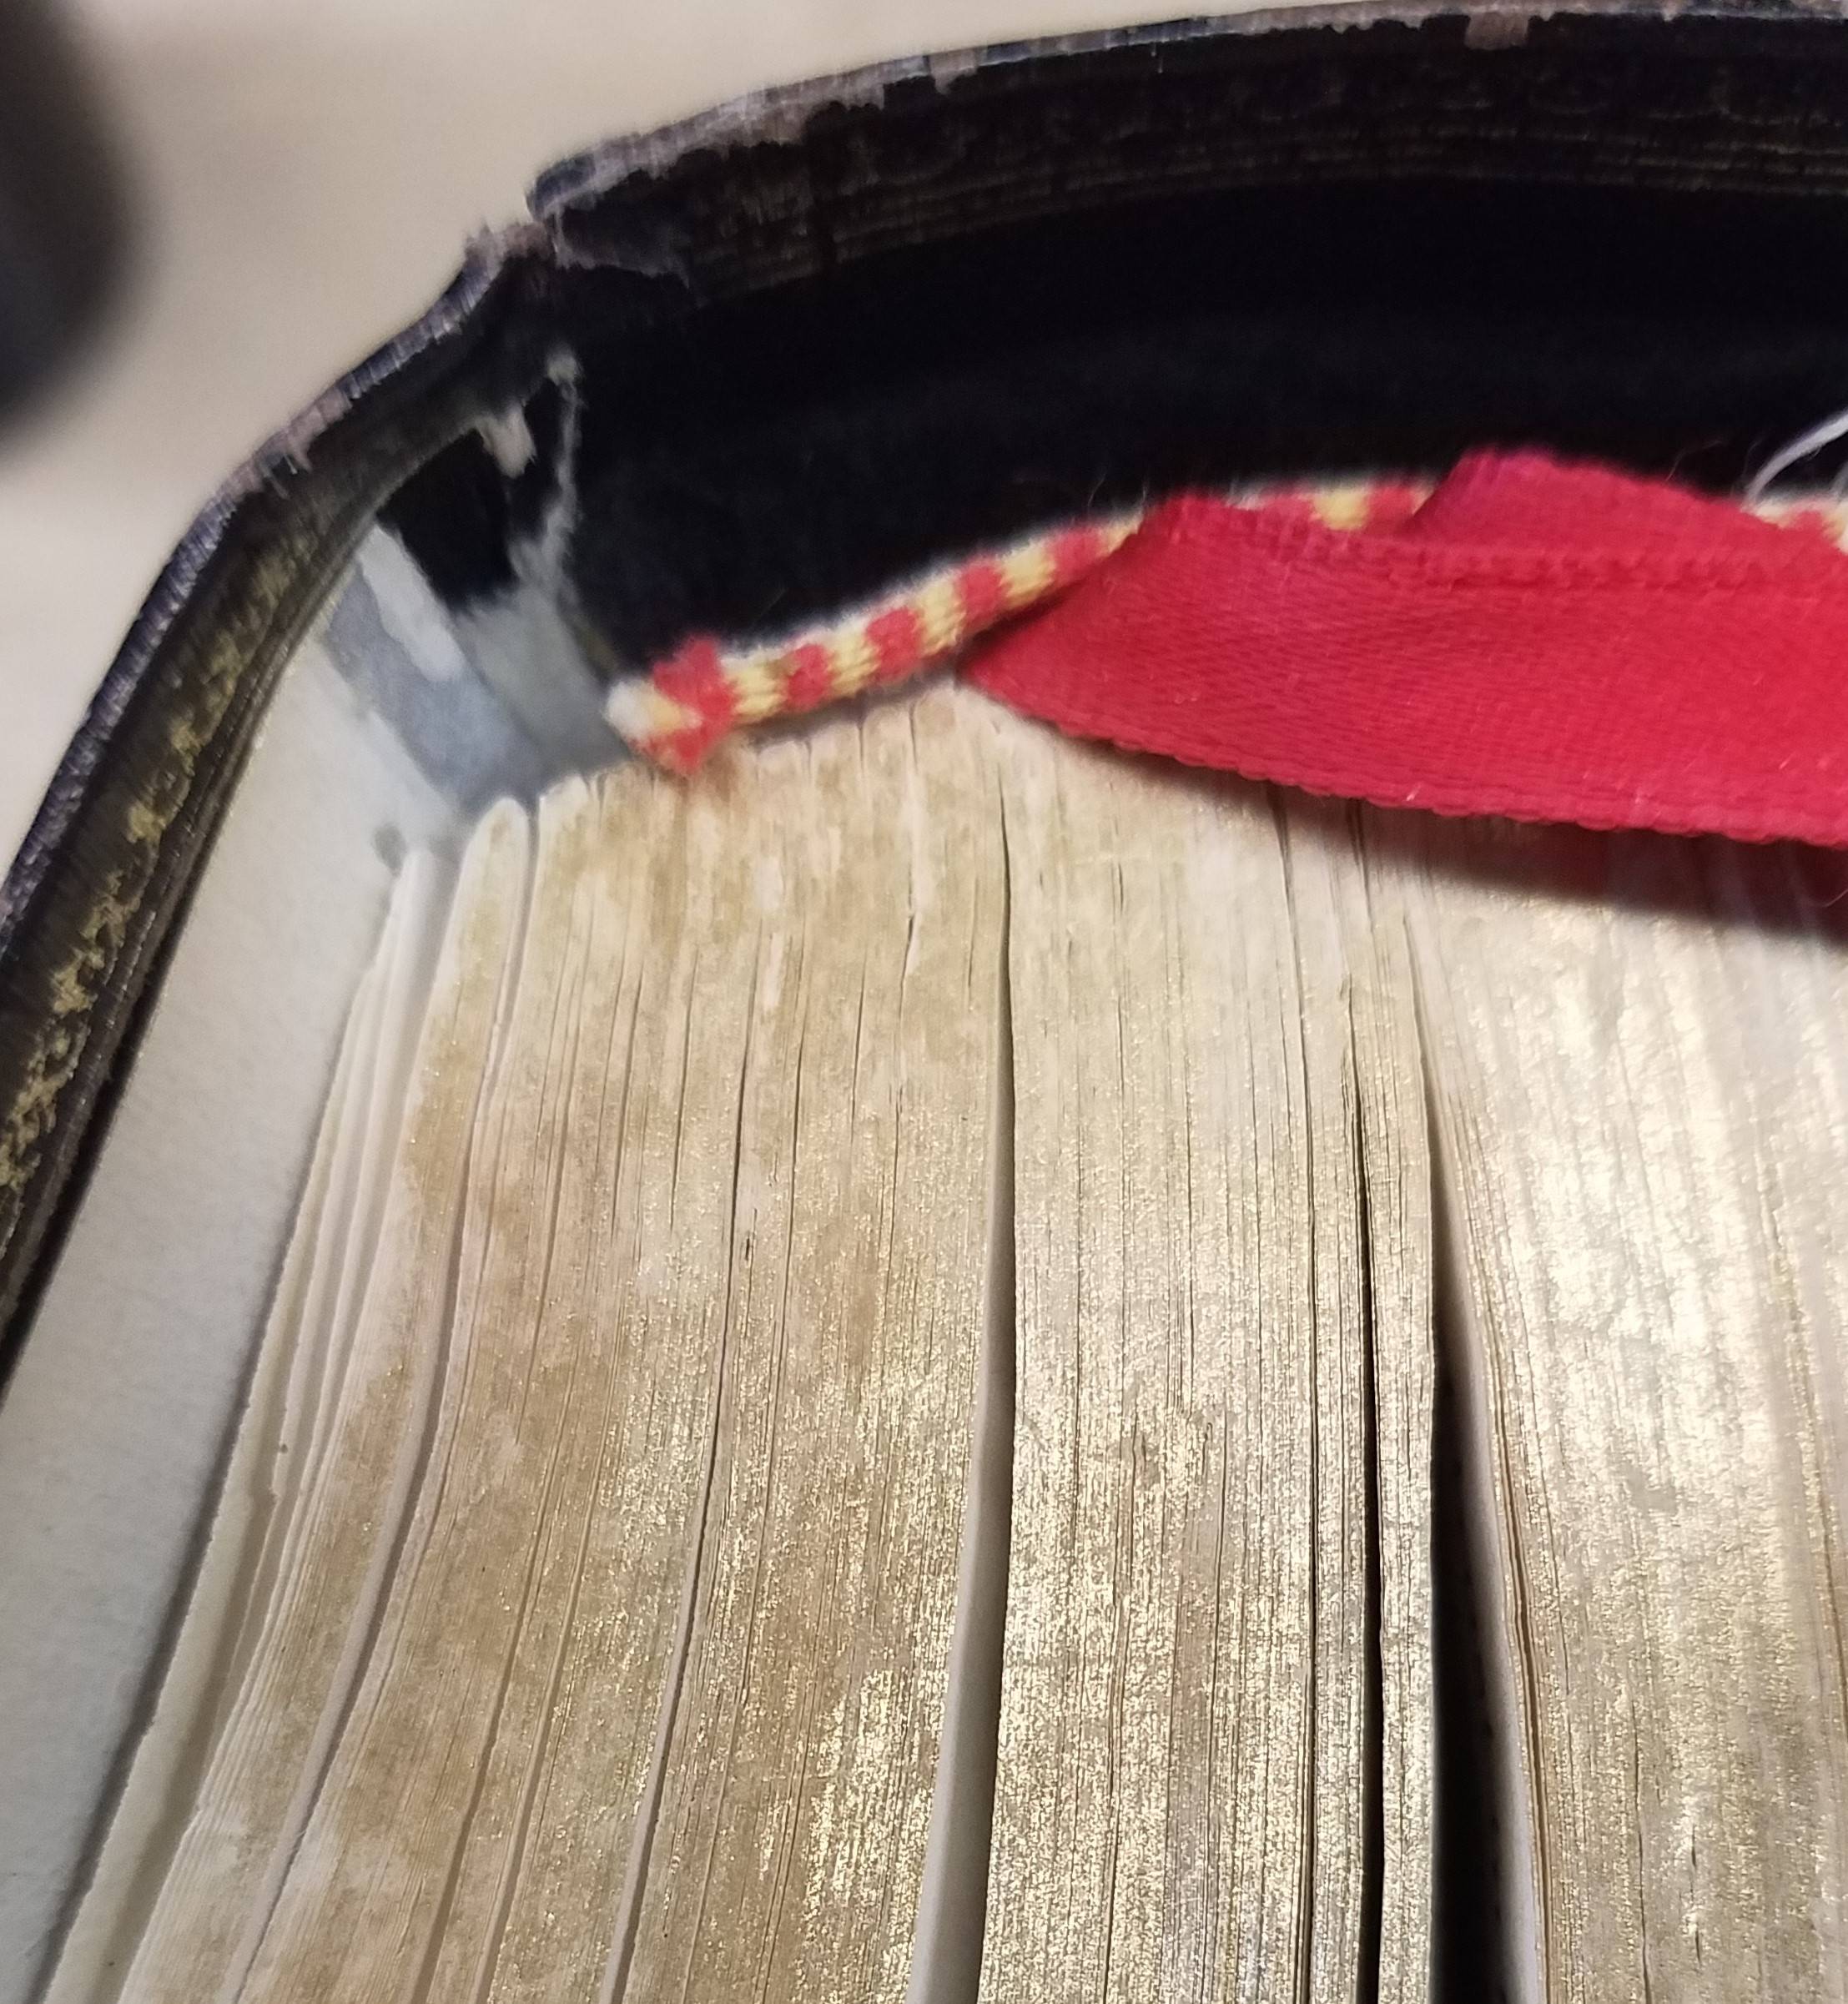 Bible improper binding